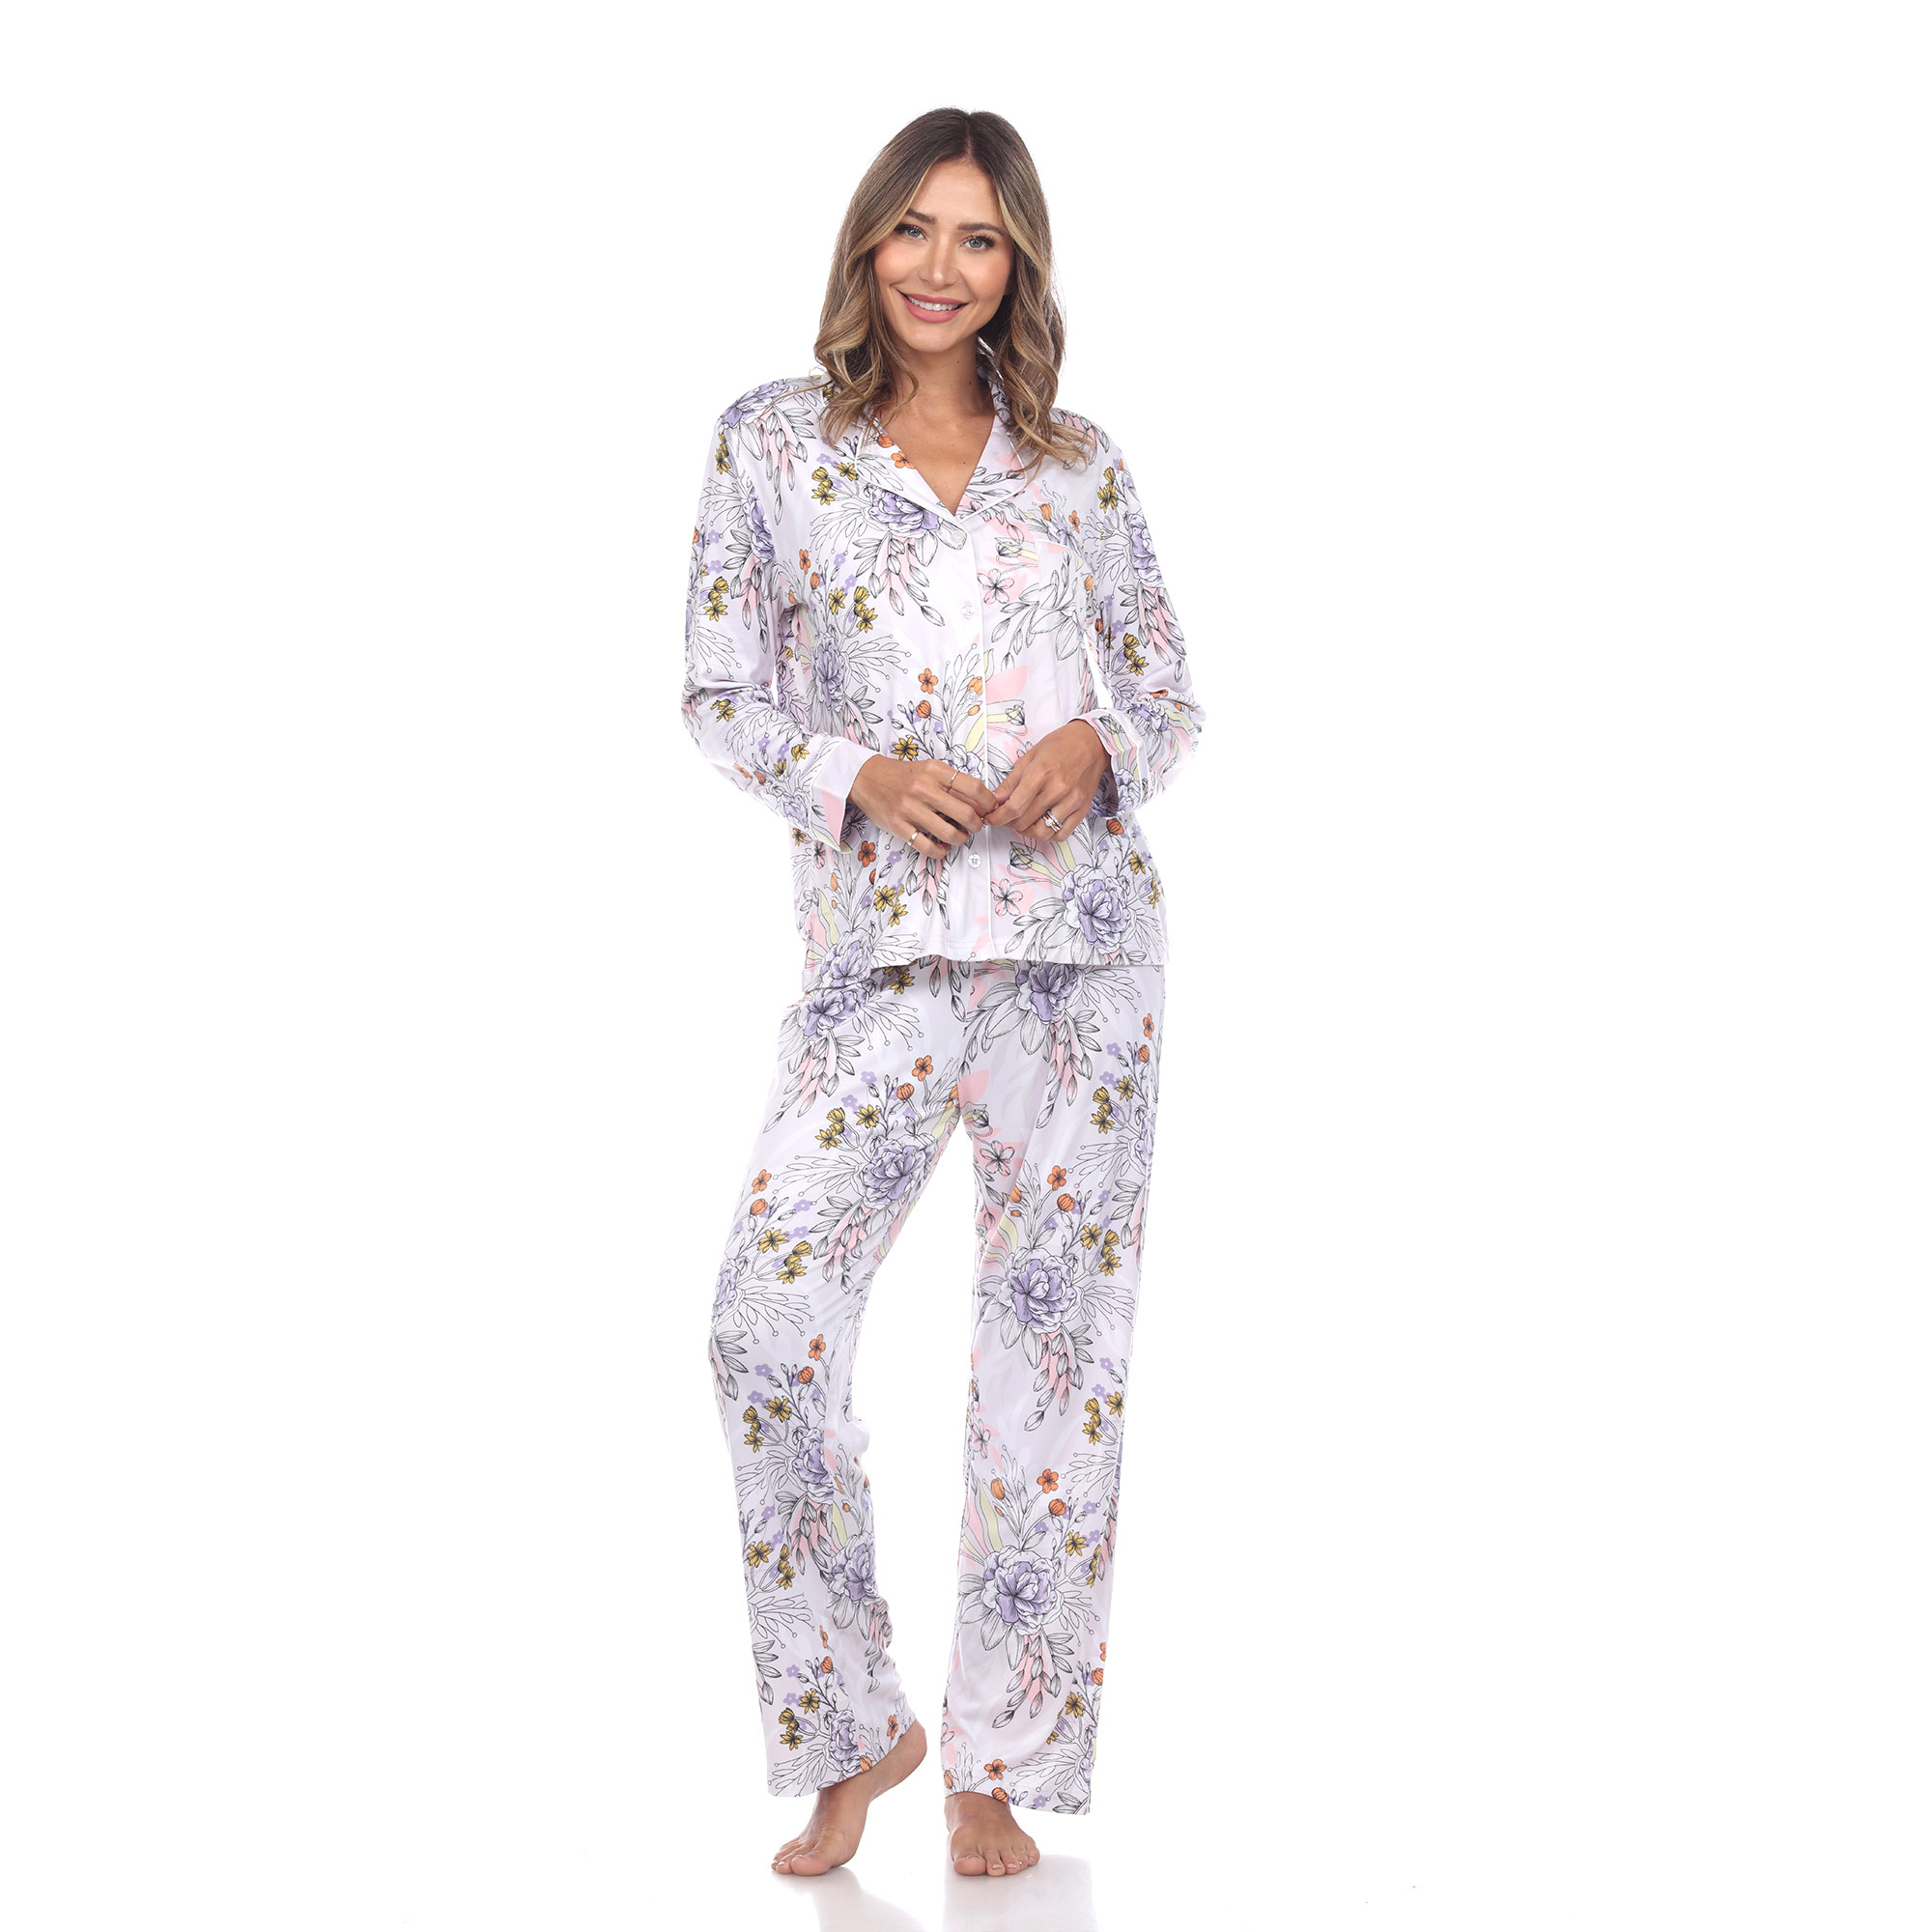 White Mark Women's Long Sleeve Floral Pajama Set - Lavender, 3X